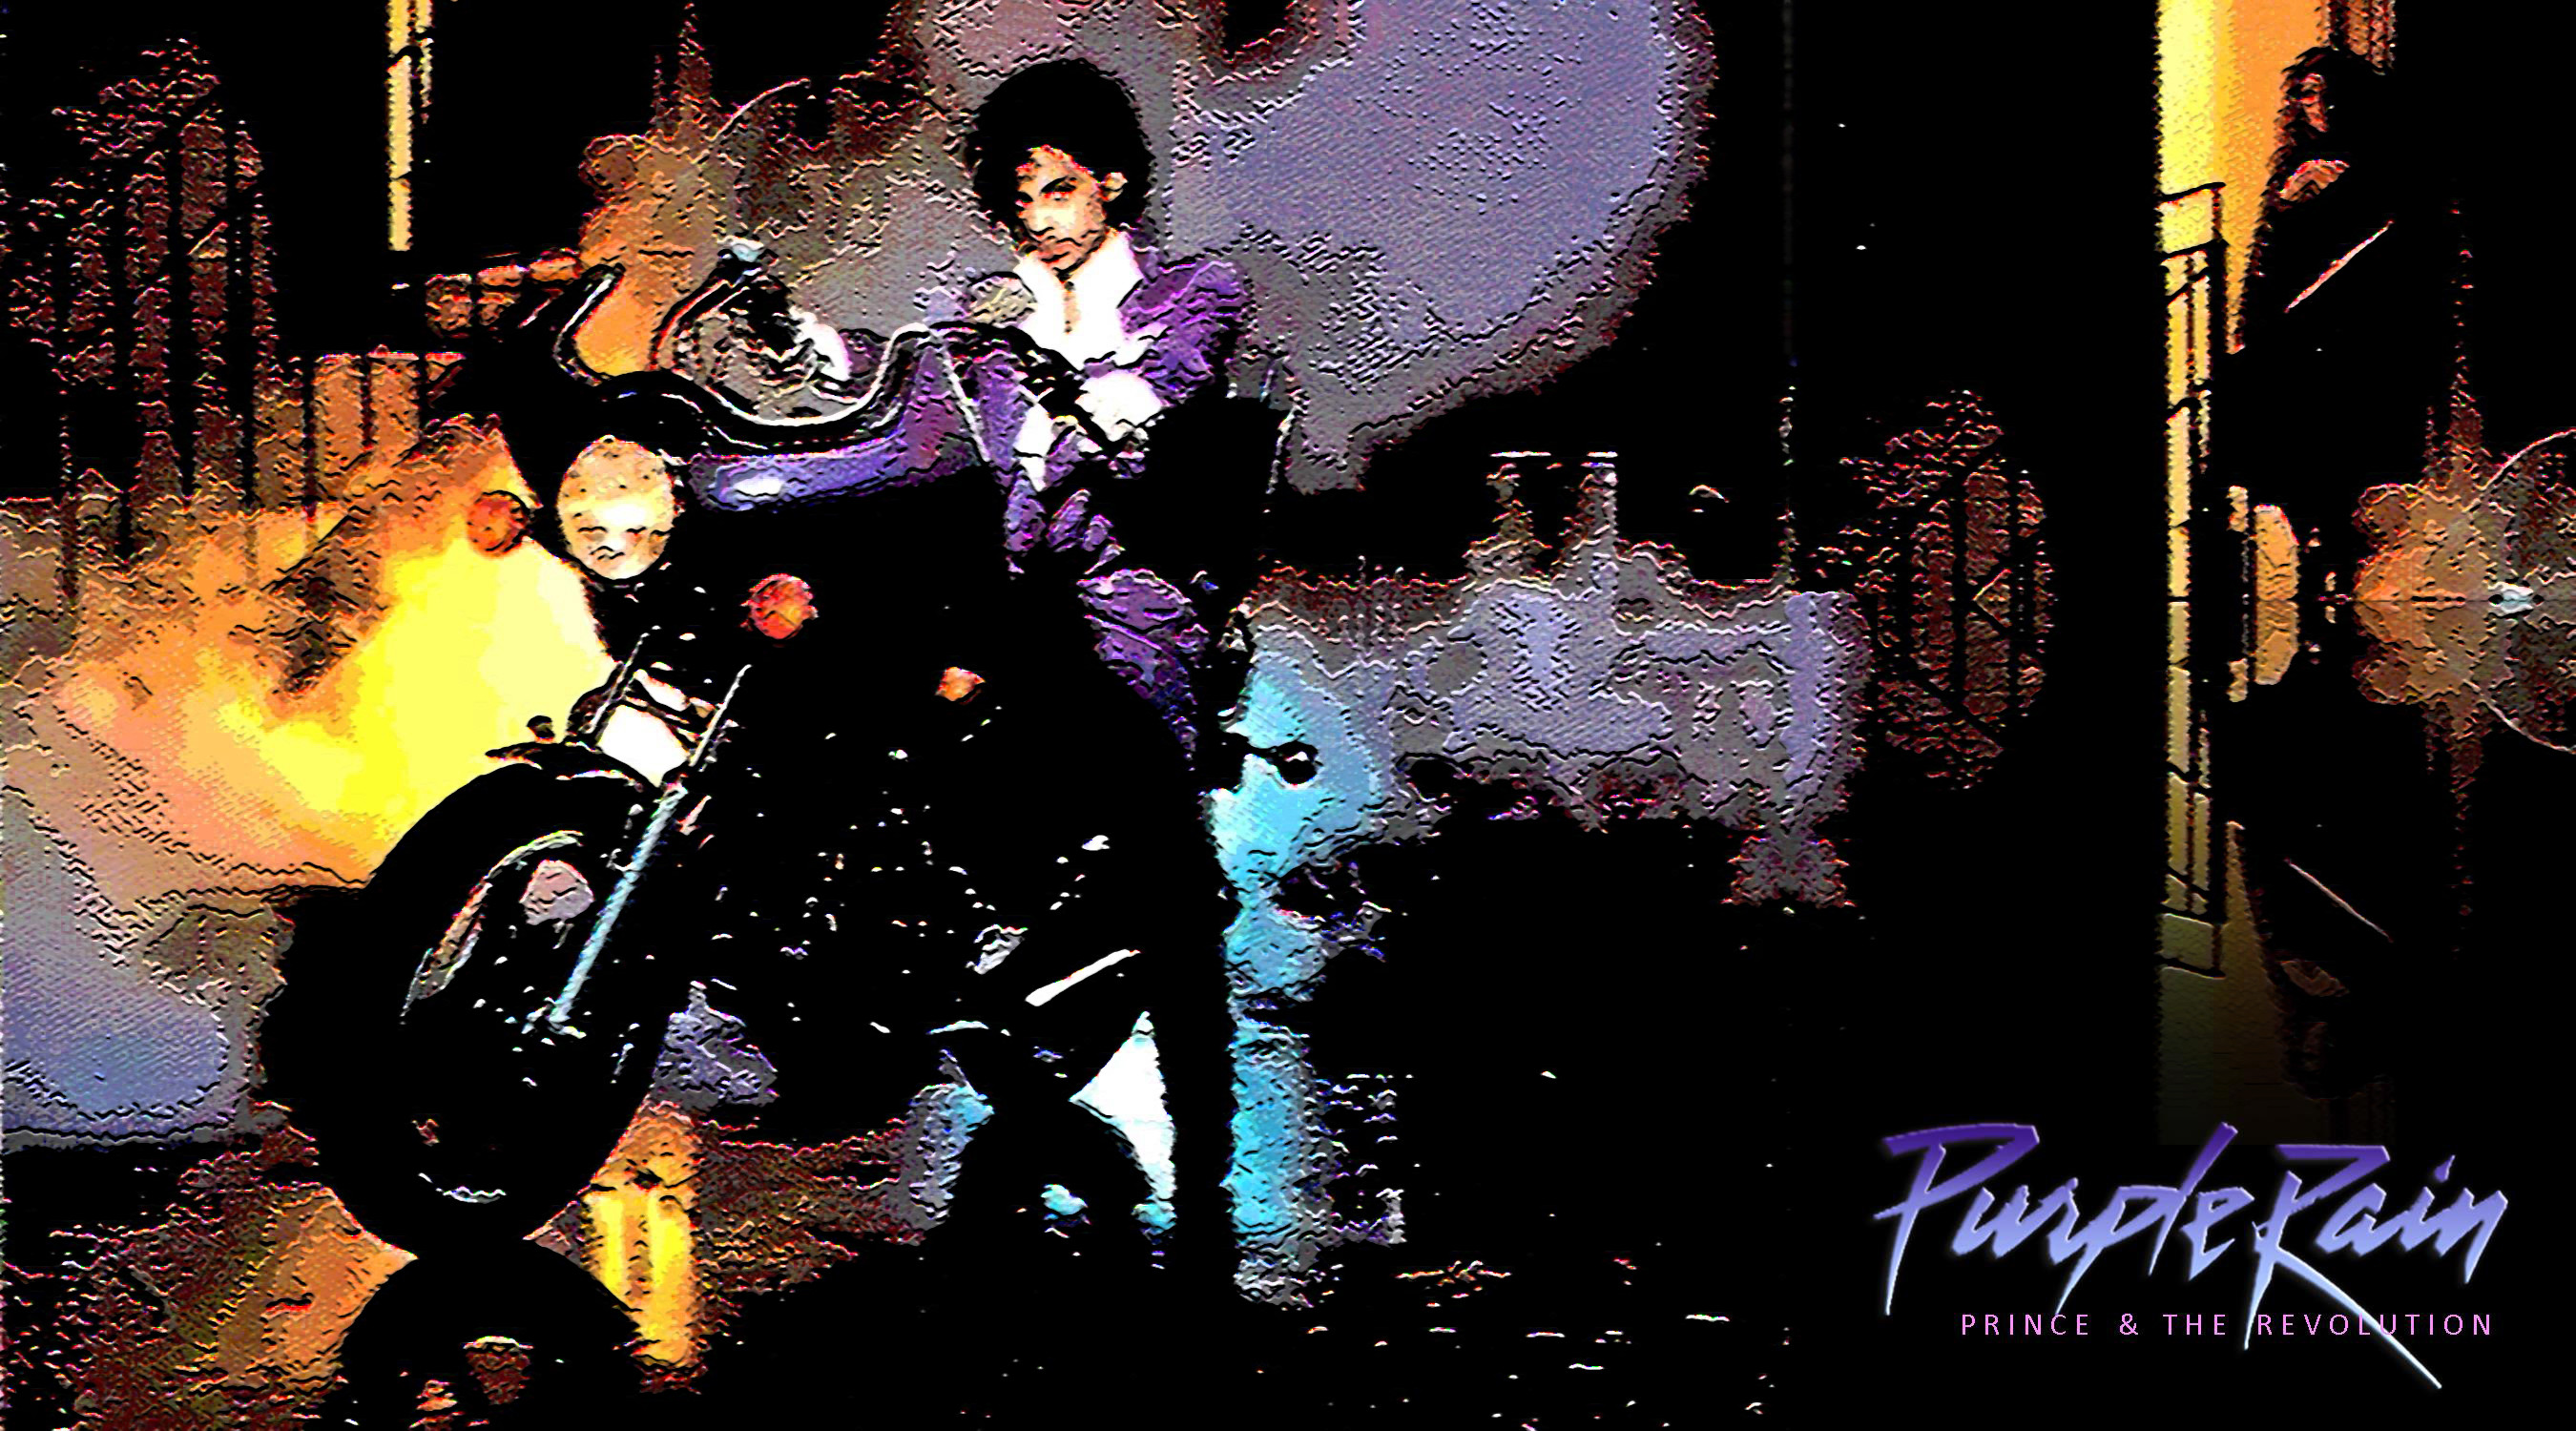 2700x1500 Purple Rain images Prince - Purple Rain wallpaper and background .